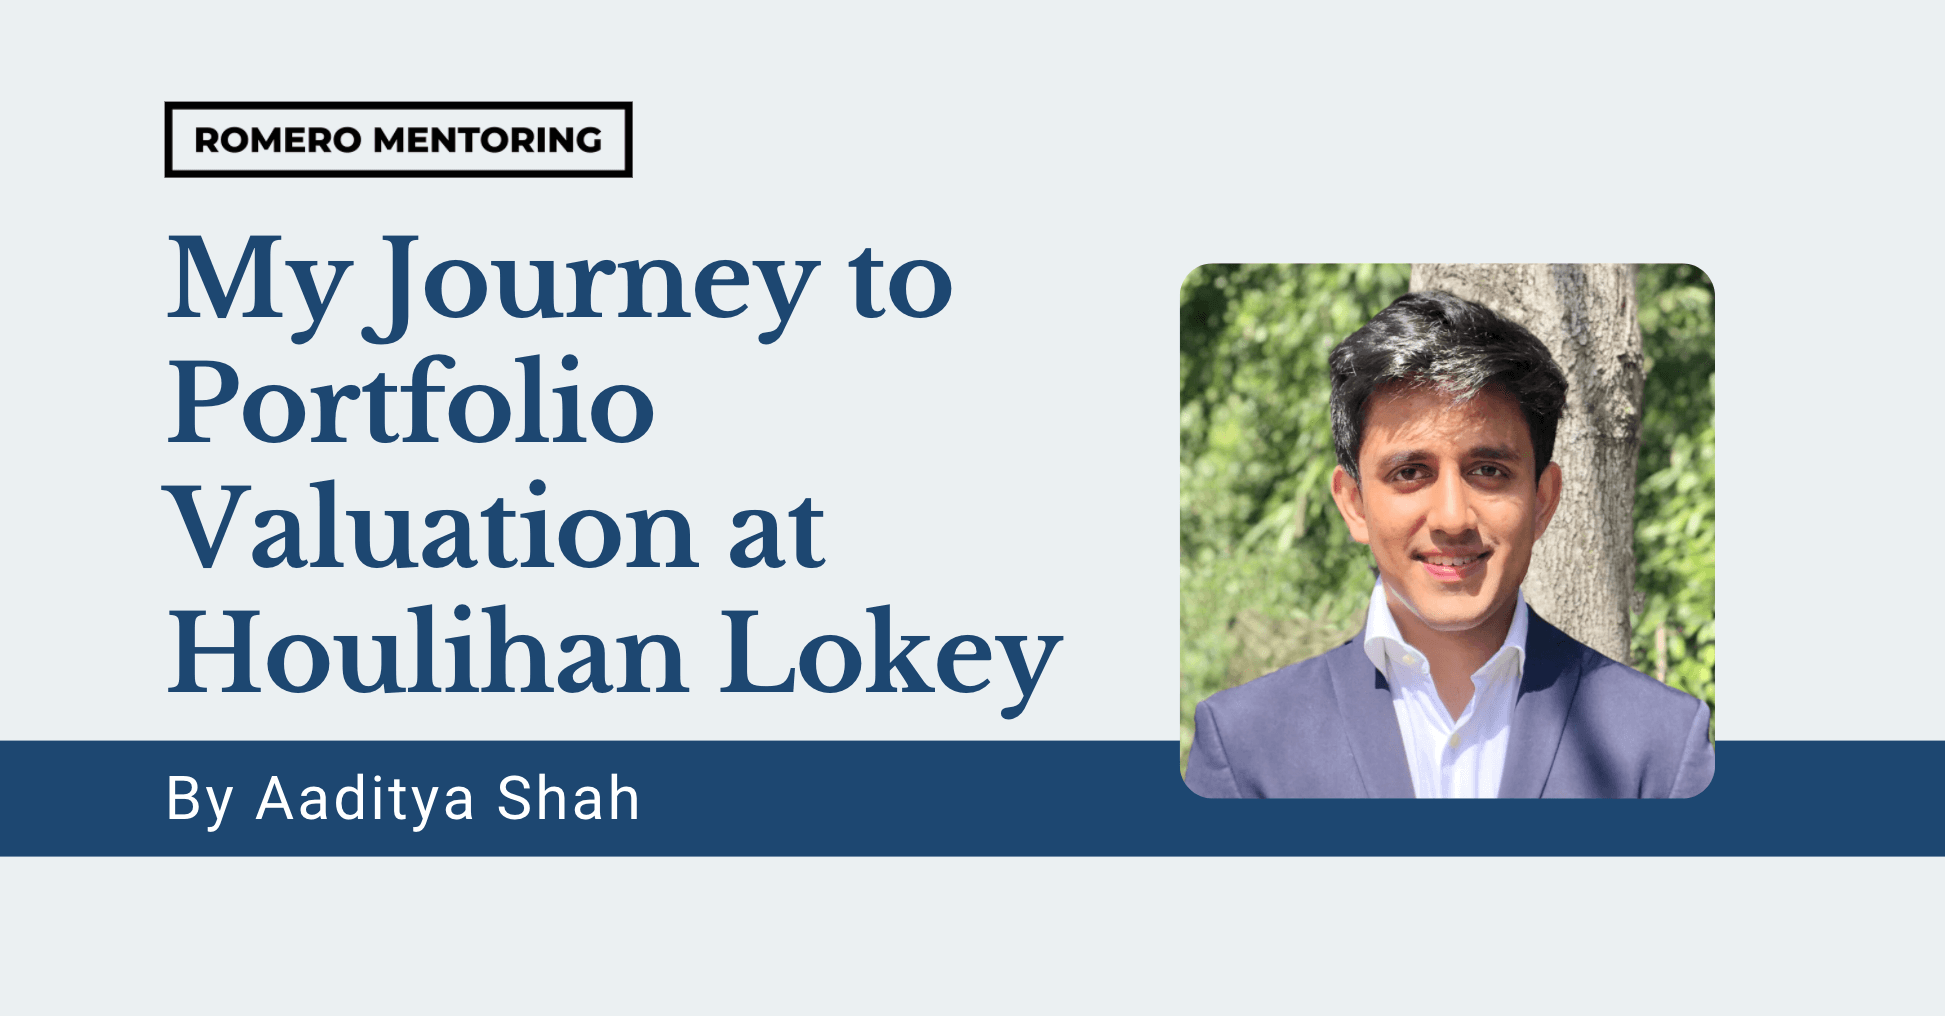 My Journey to Portfolio Valuation at Houlihan Lokey